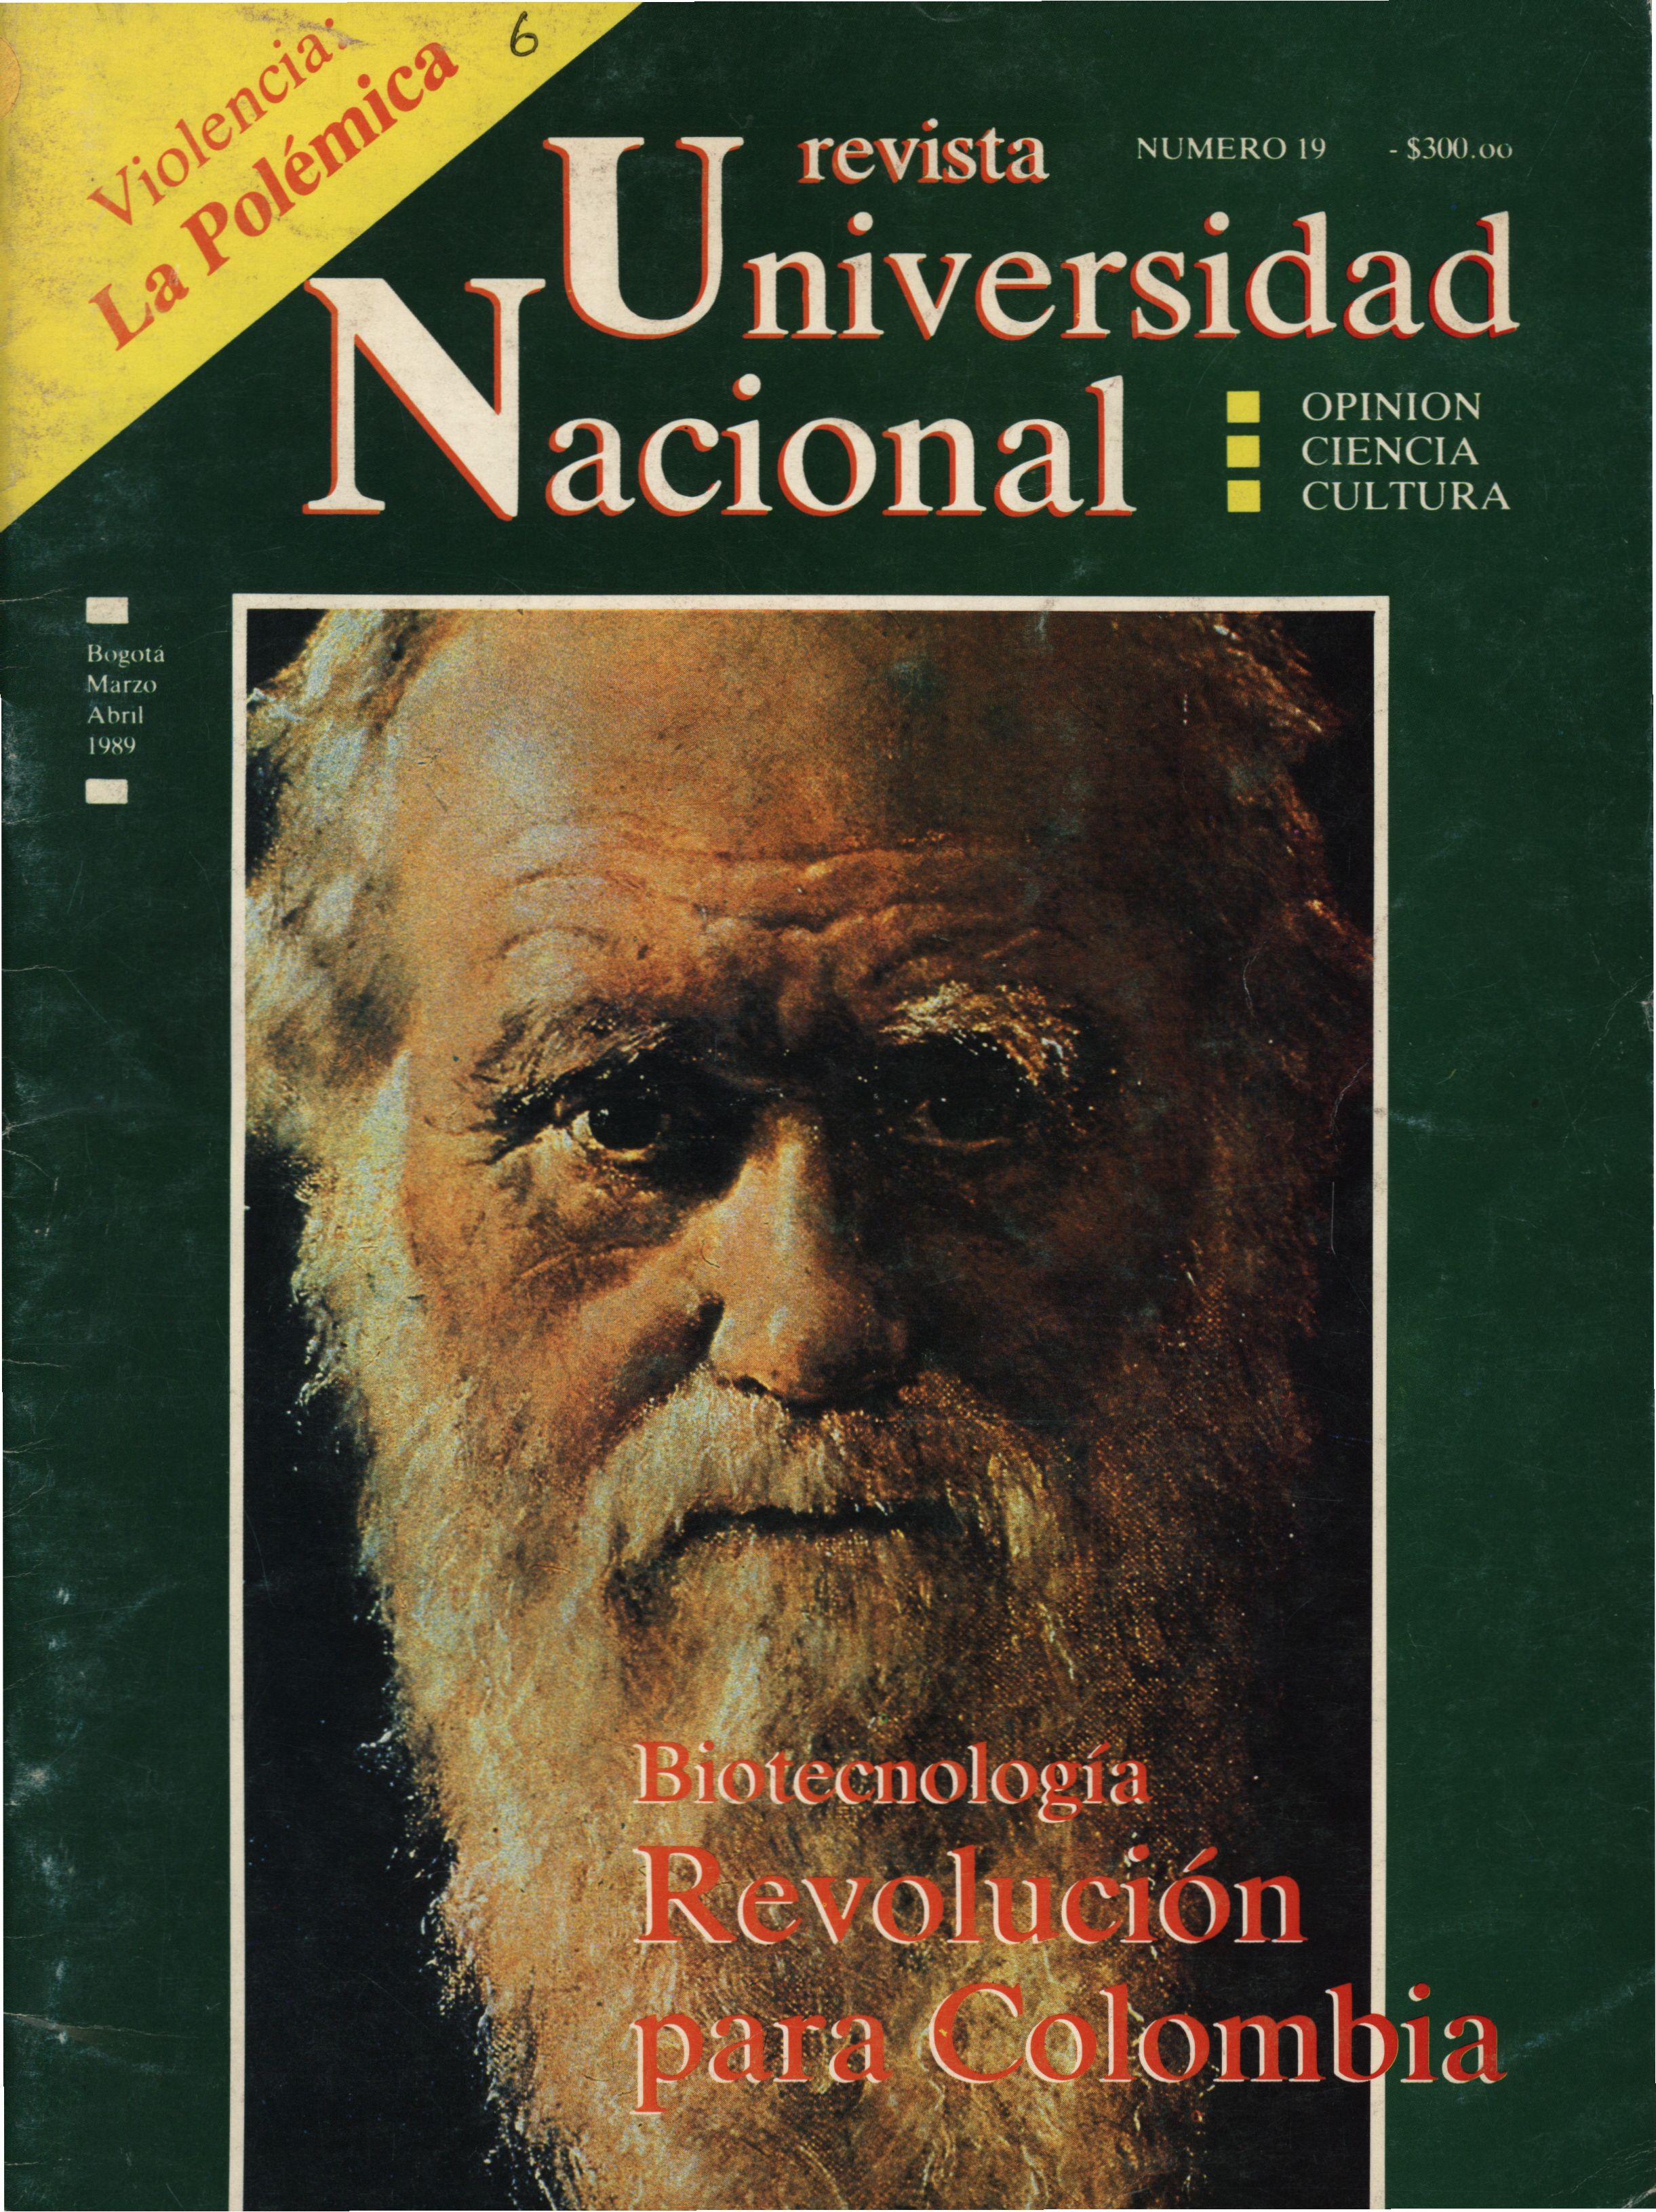 Revista de la Universidad Nacional Vol. 1 No. 6 (Mar-Abr, 1989)